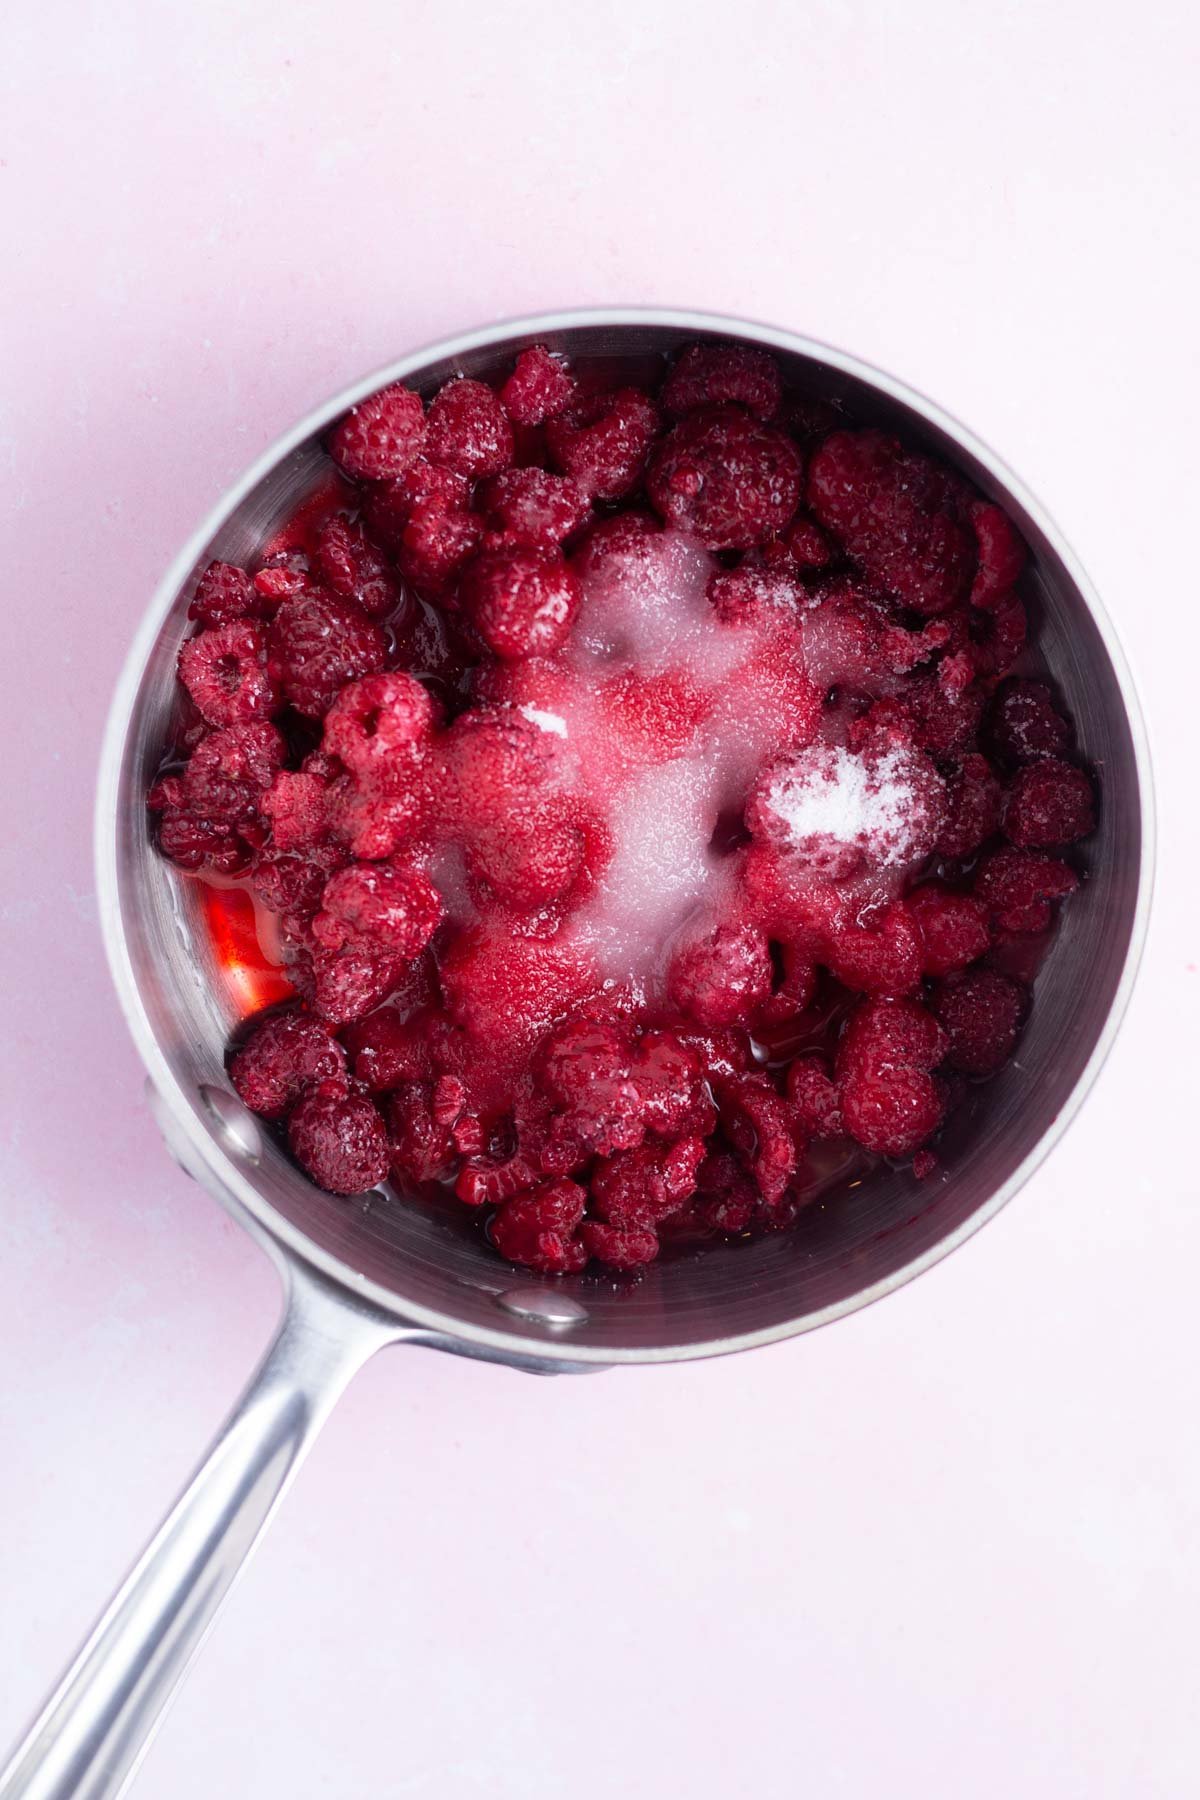 raspberries, sugar and water in a saucepan